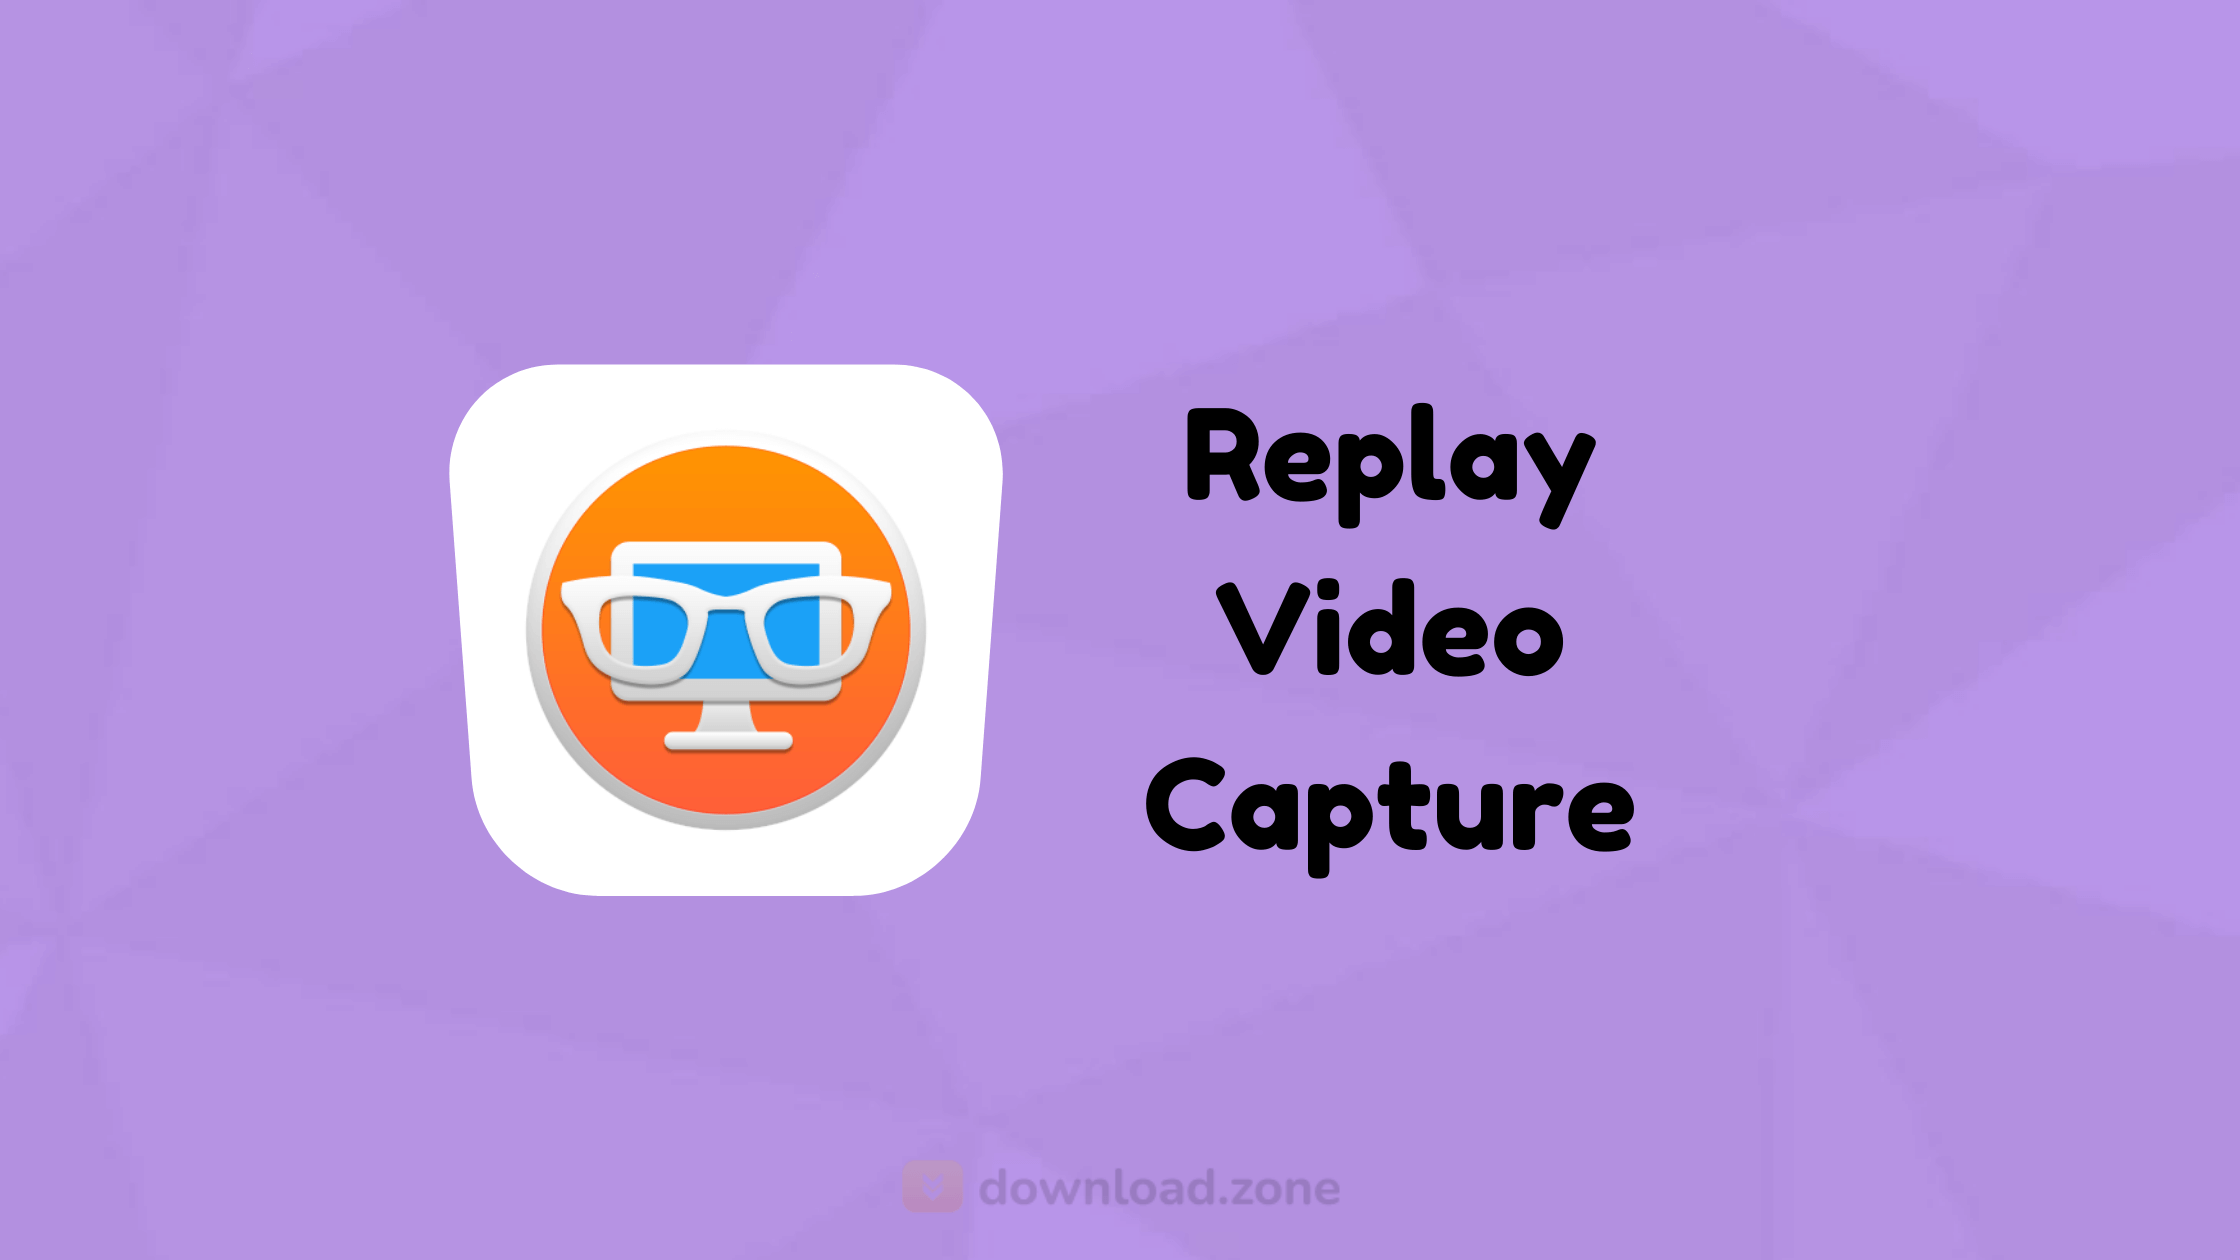 replay video capture 10